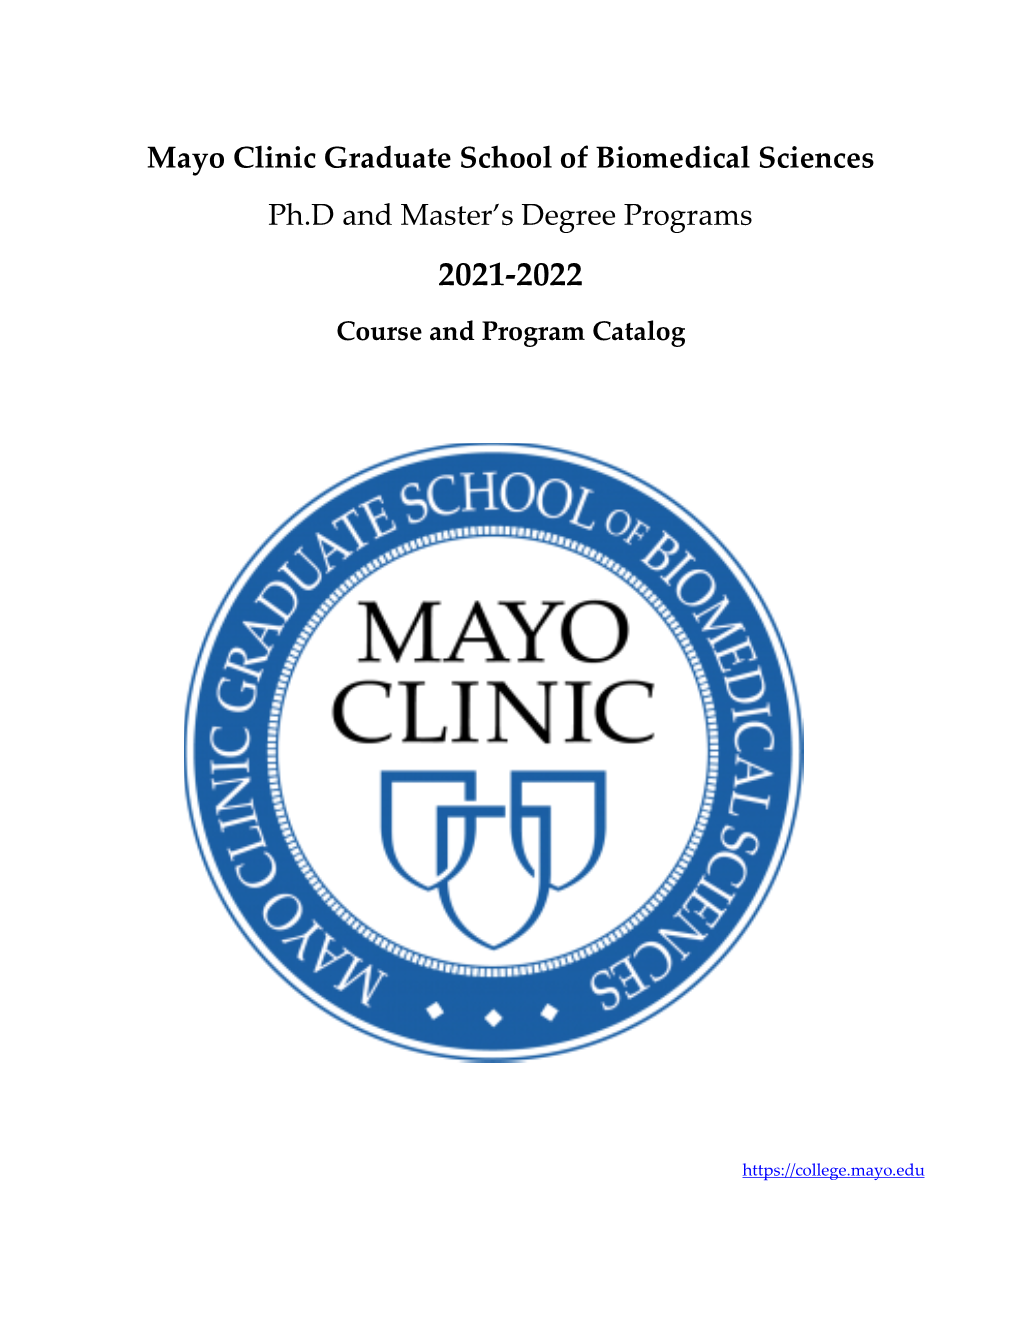 Ph.D. and Master's Degree Program Catalog (2021-2022)